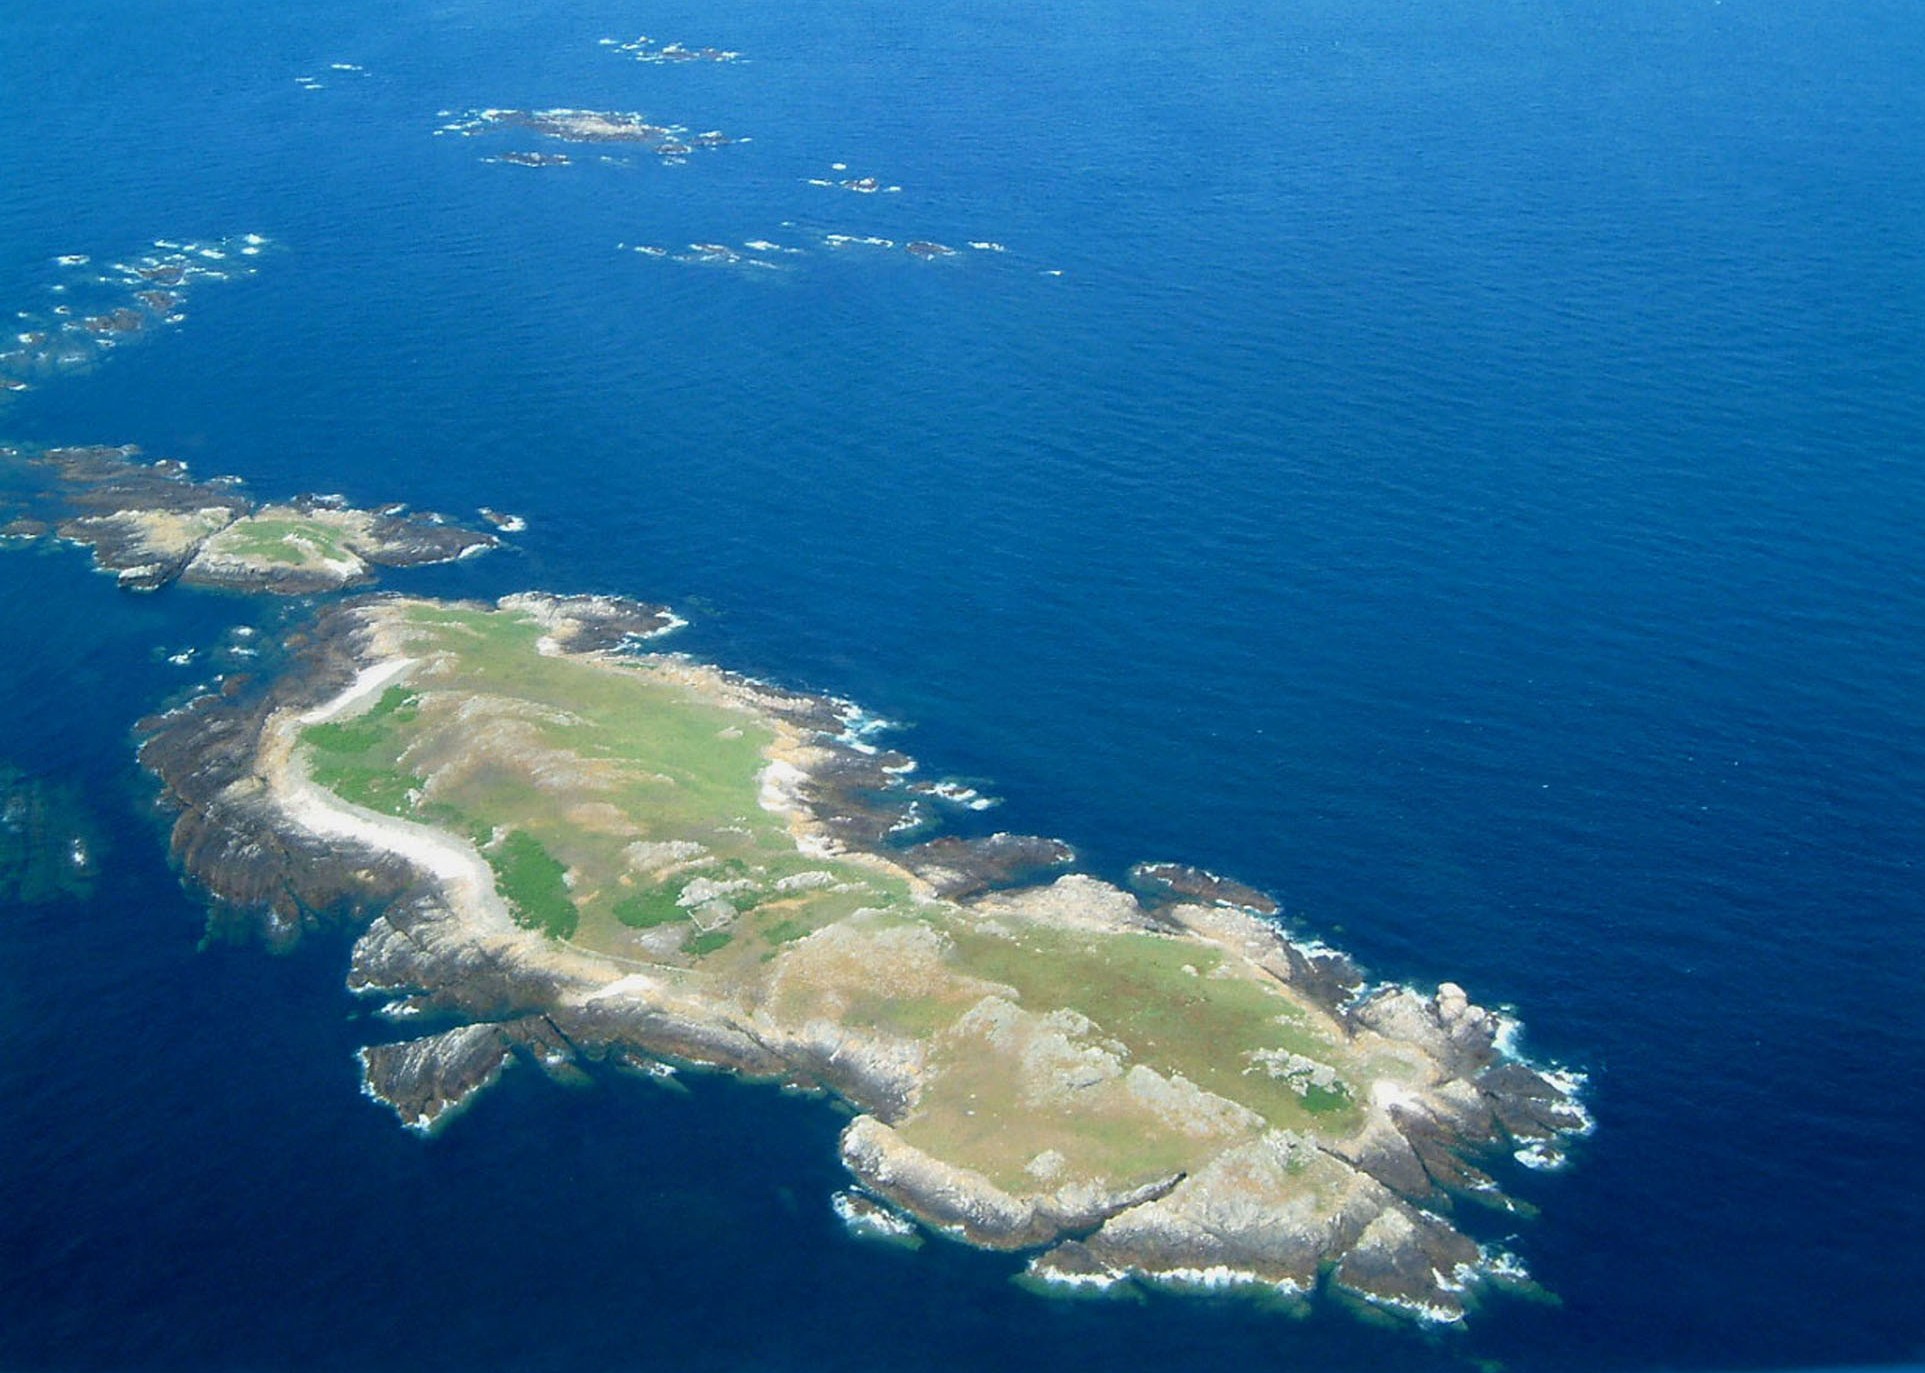 The smallest island is great britain. Остров Олдерни нормандские острова. Остров Гренси Англия. Зондська протока. Великобритания сверху остров.